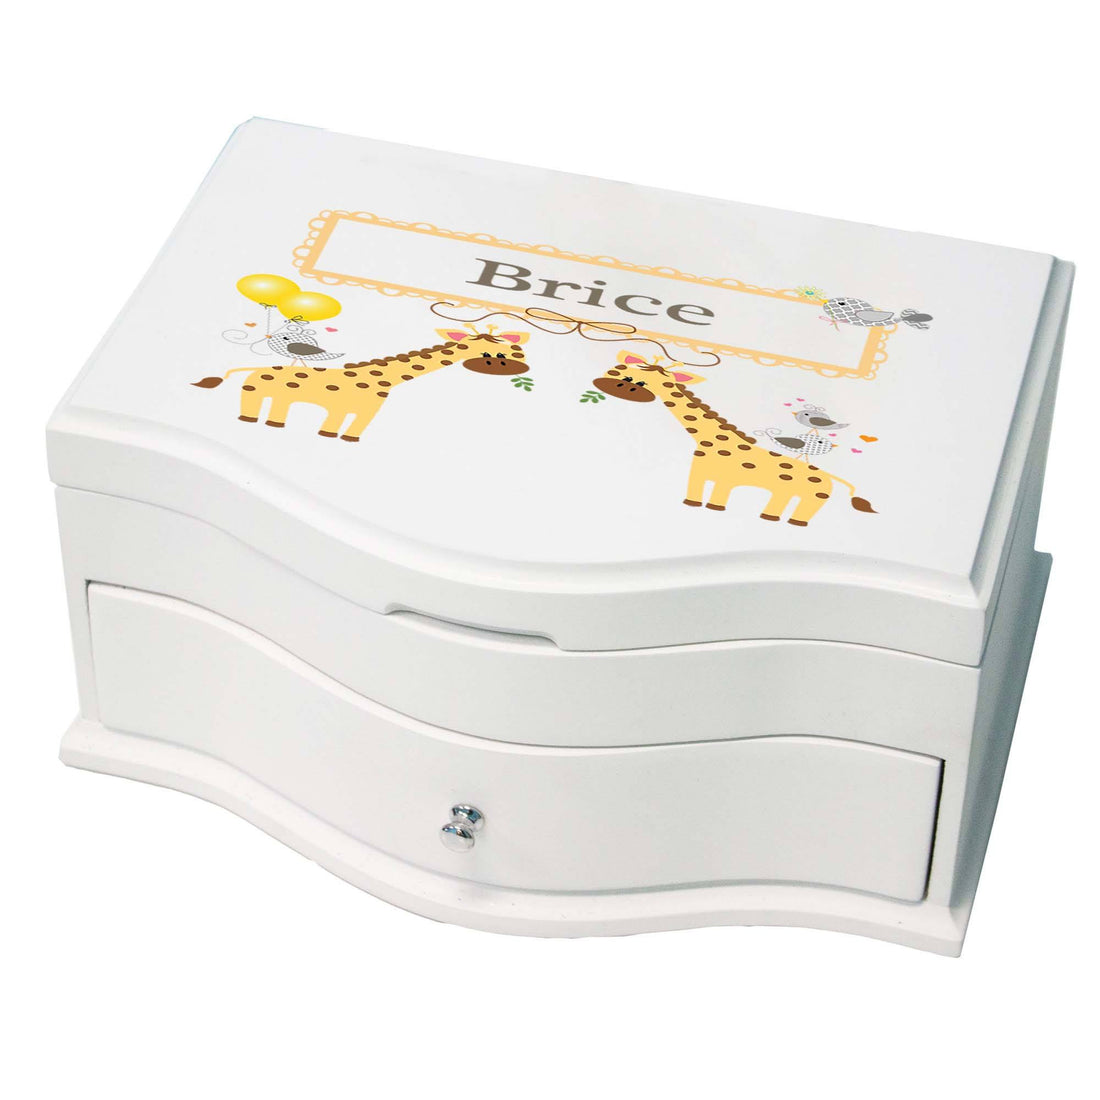 Princess Girls Jewelry Box with Giraffe design